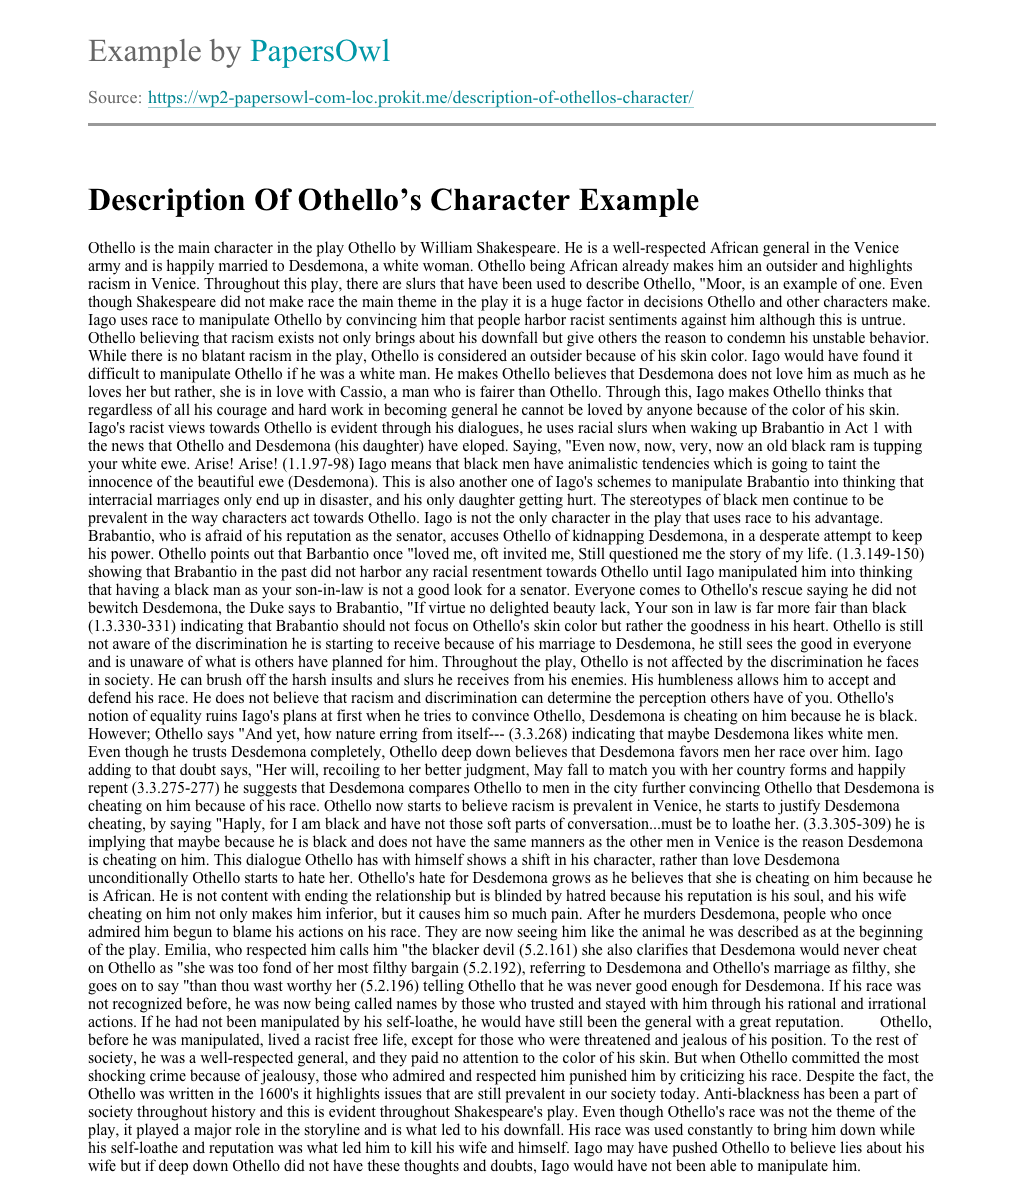 essay on othello's character